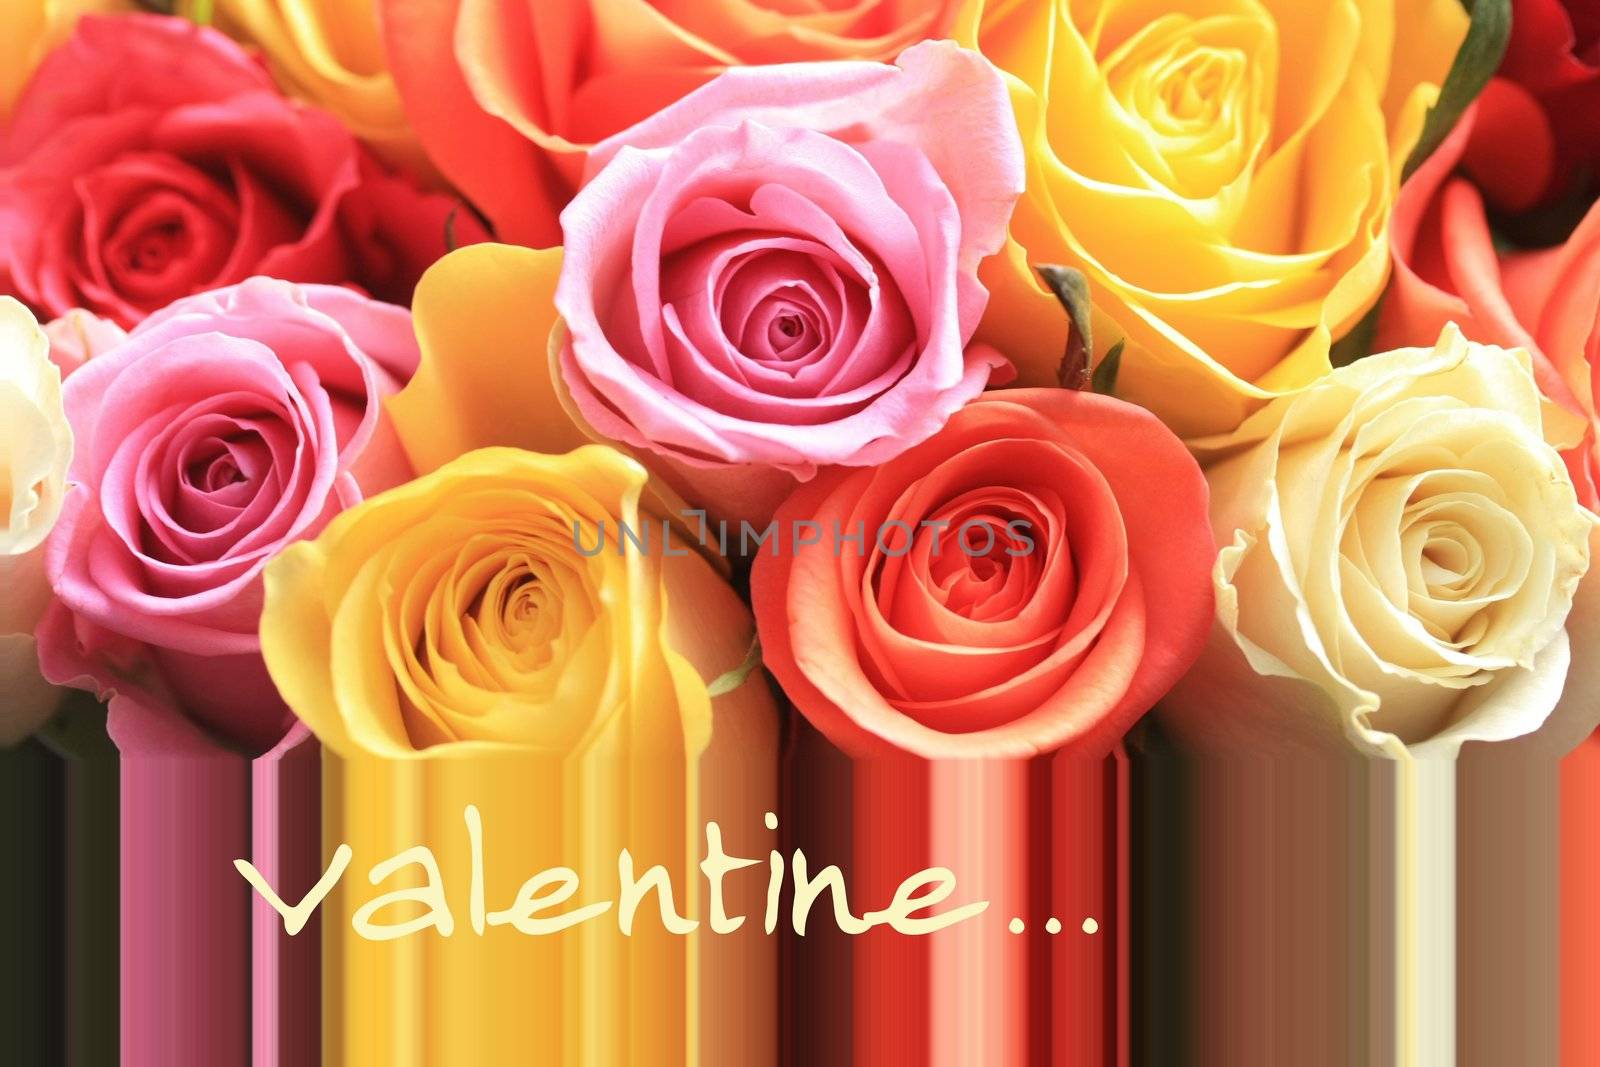 Valentine roses greeting card